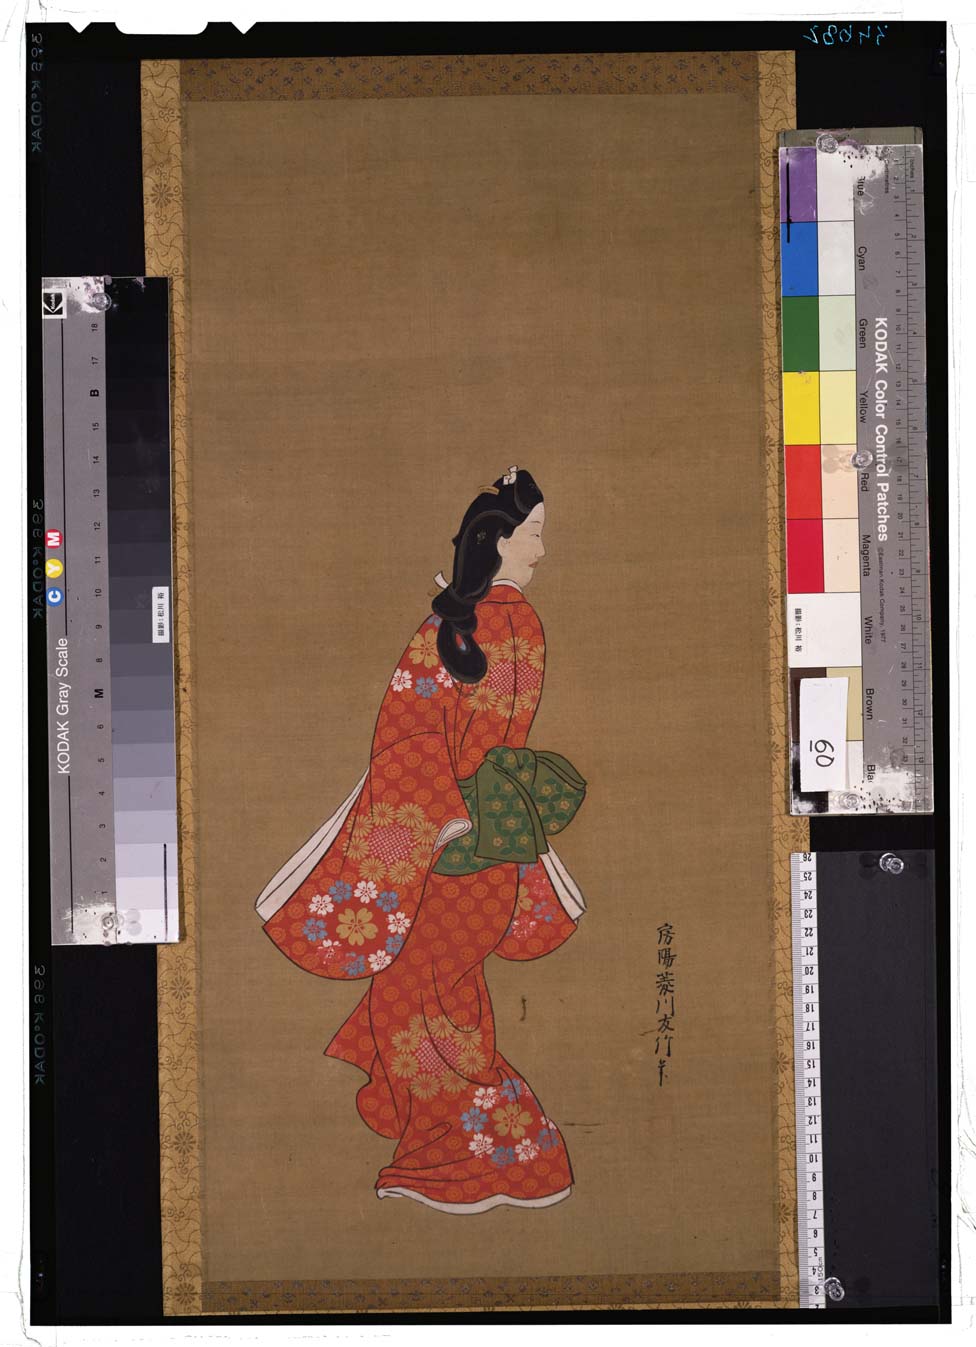 C0034682 見返り美人図 - 東京国立博物館 画像検索